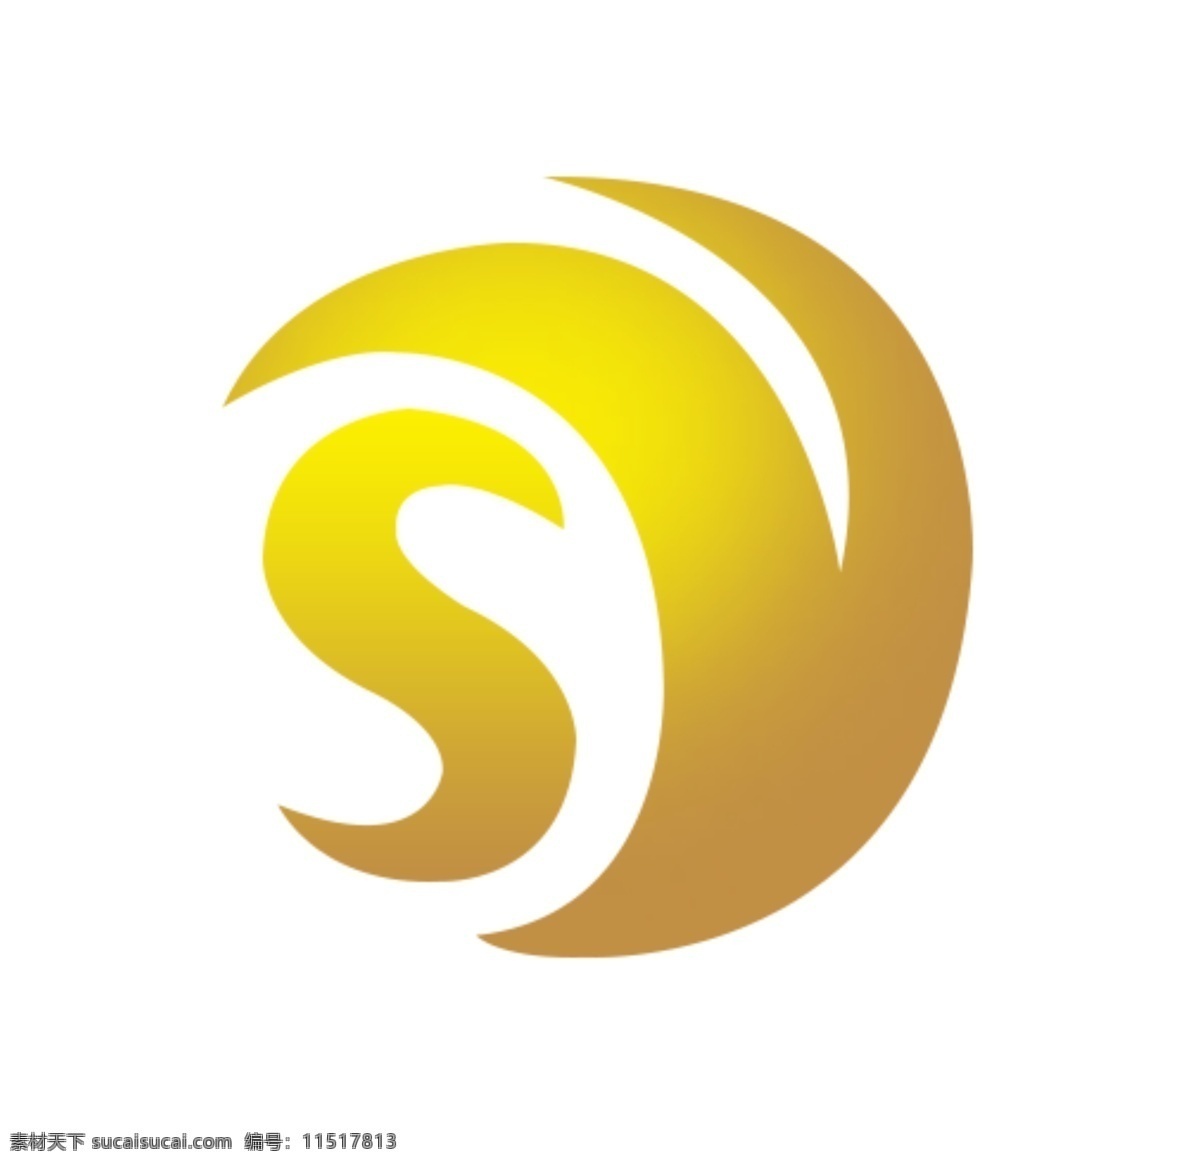 sy 金色 logo 标识 渐变图标 金色logo 商标